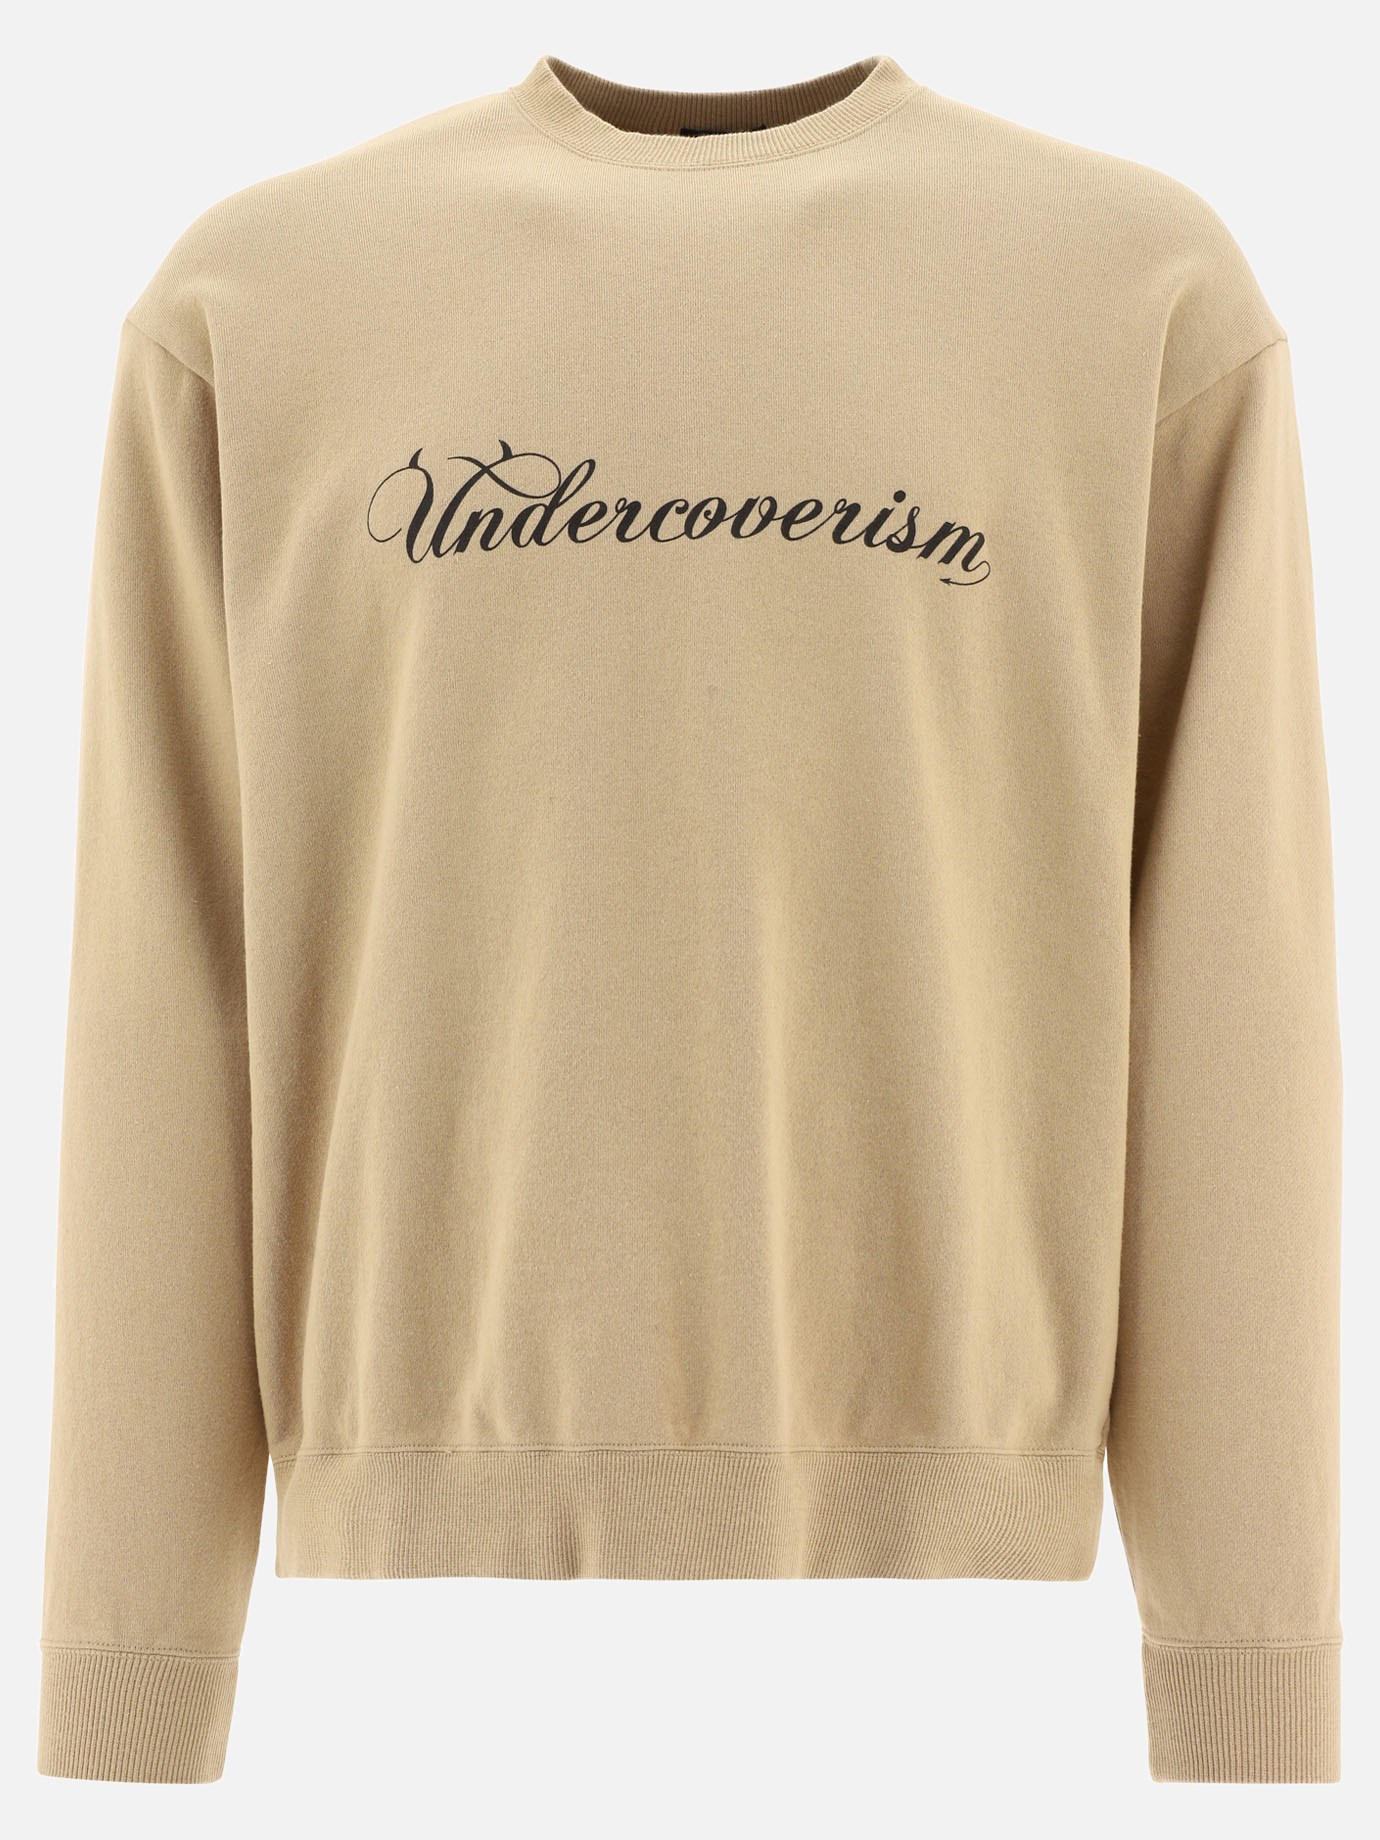  Undercoverism  sweatshirtby Undercoverism - 3